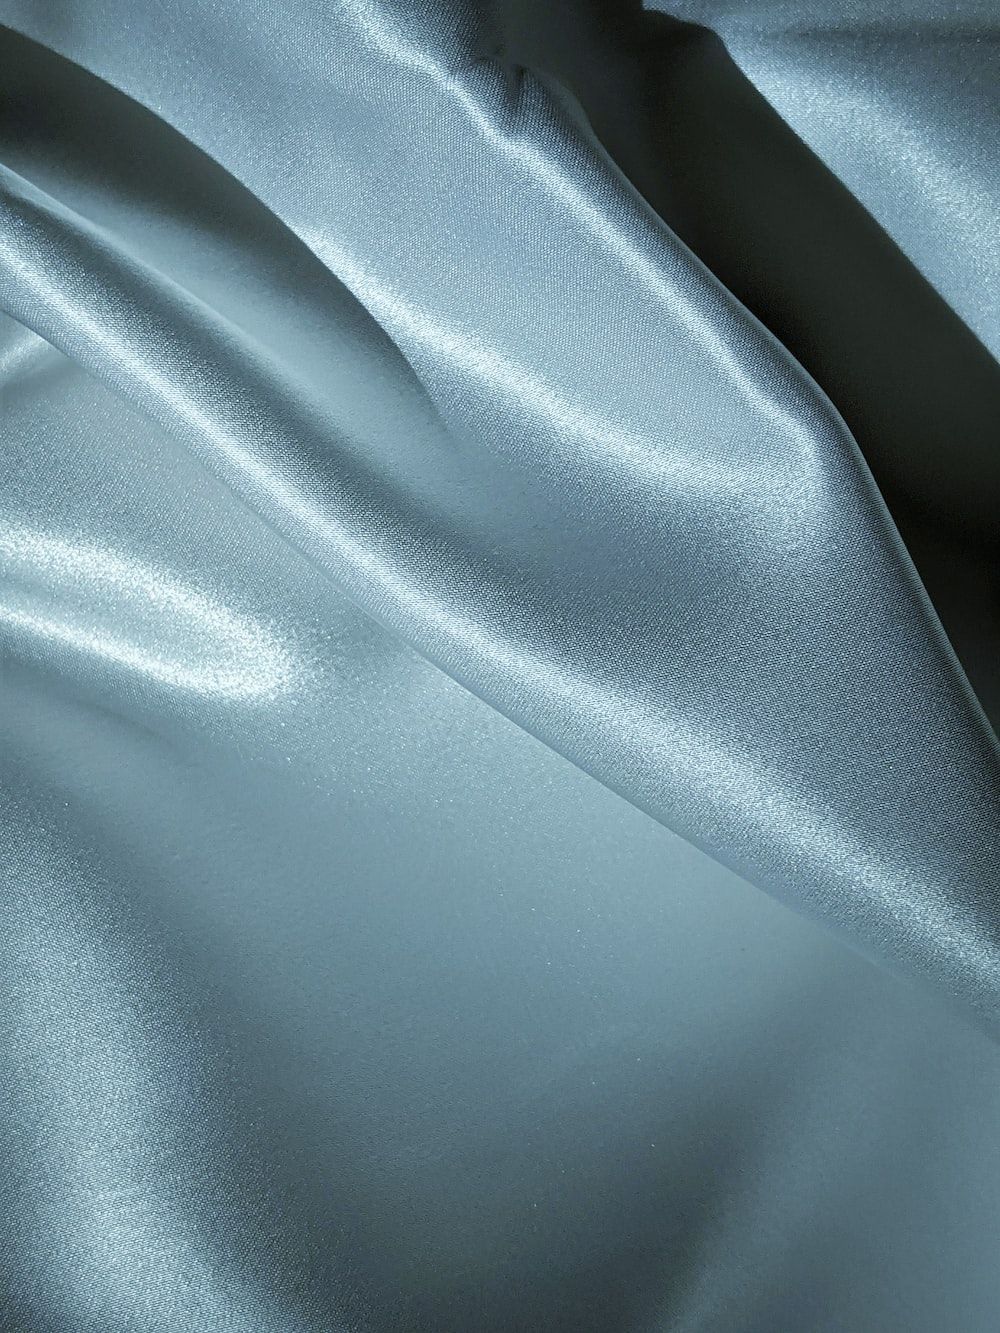 A close up of a silver colored silk fabric - Silk